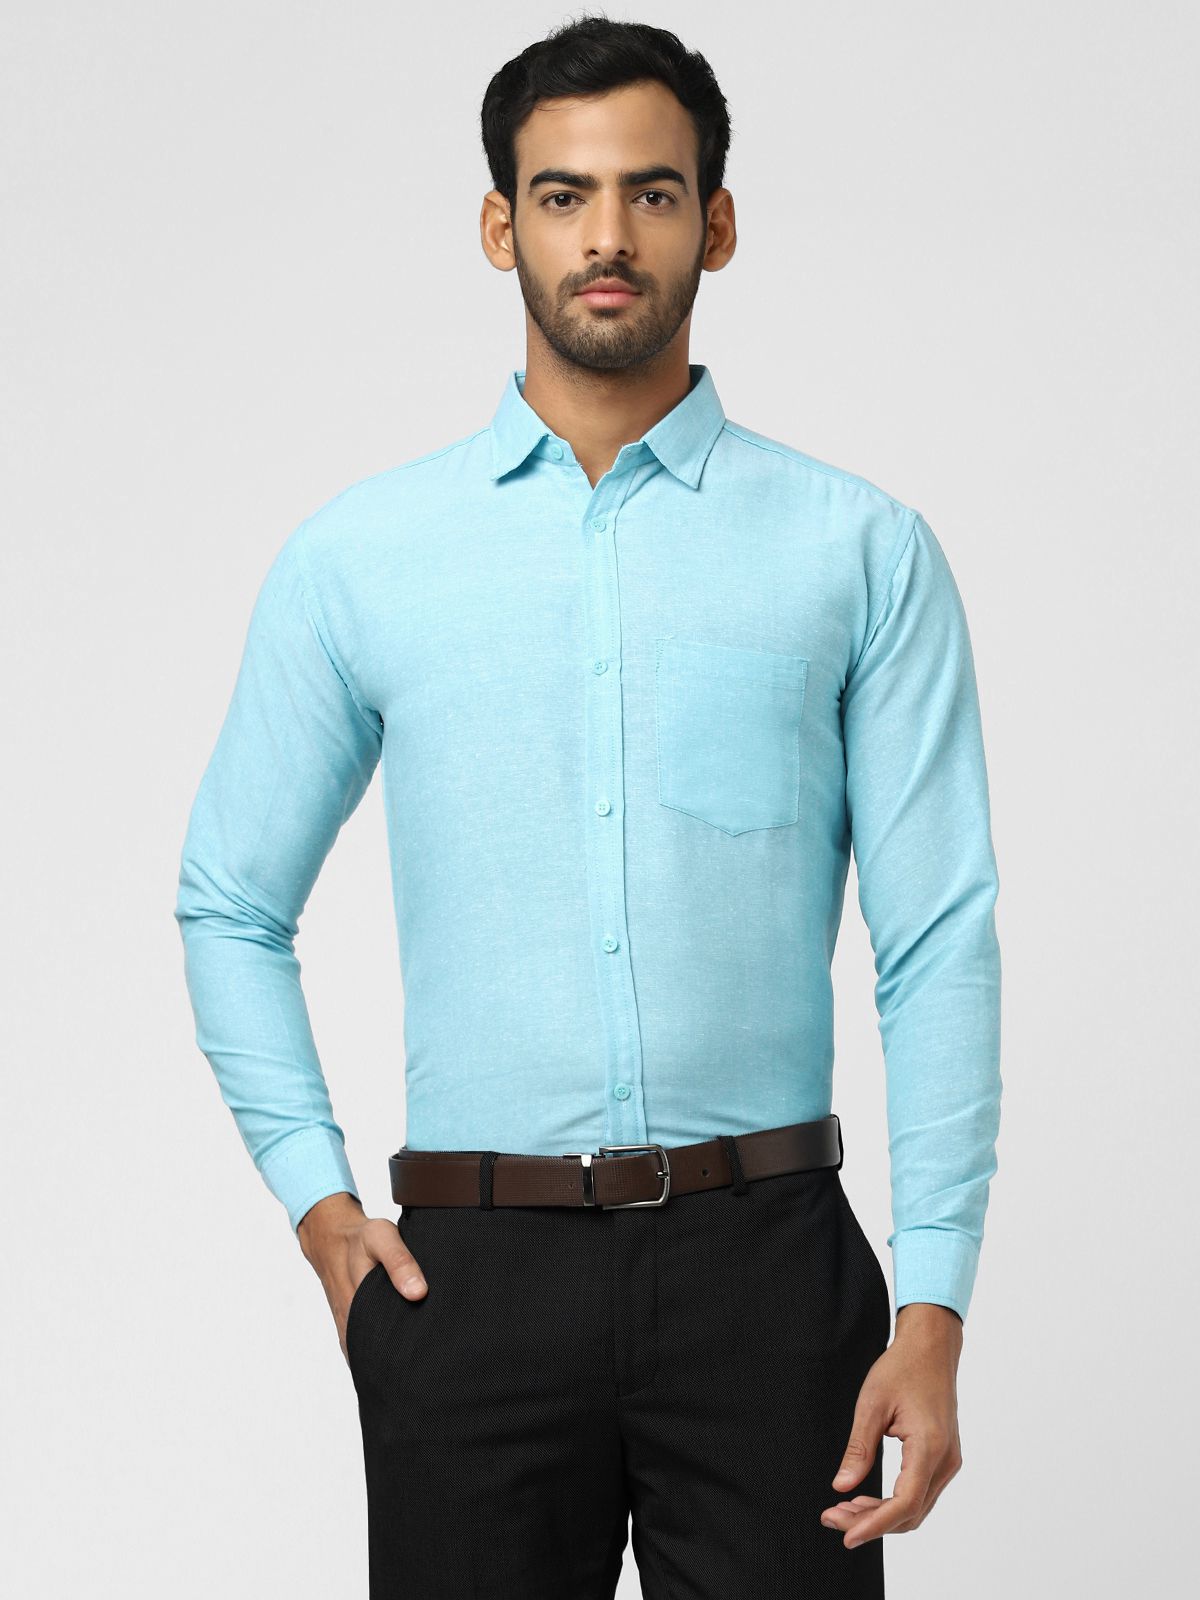     			DESHBANDHU DBK - Turquoise Cotton Regular Fit Men's Formal Shirt ( Pack of 1 )